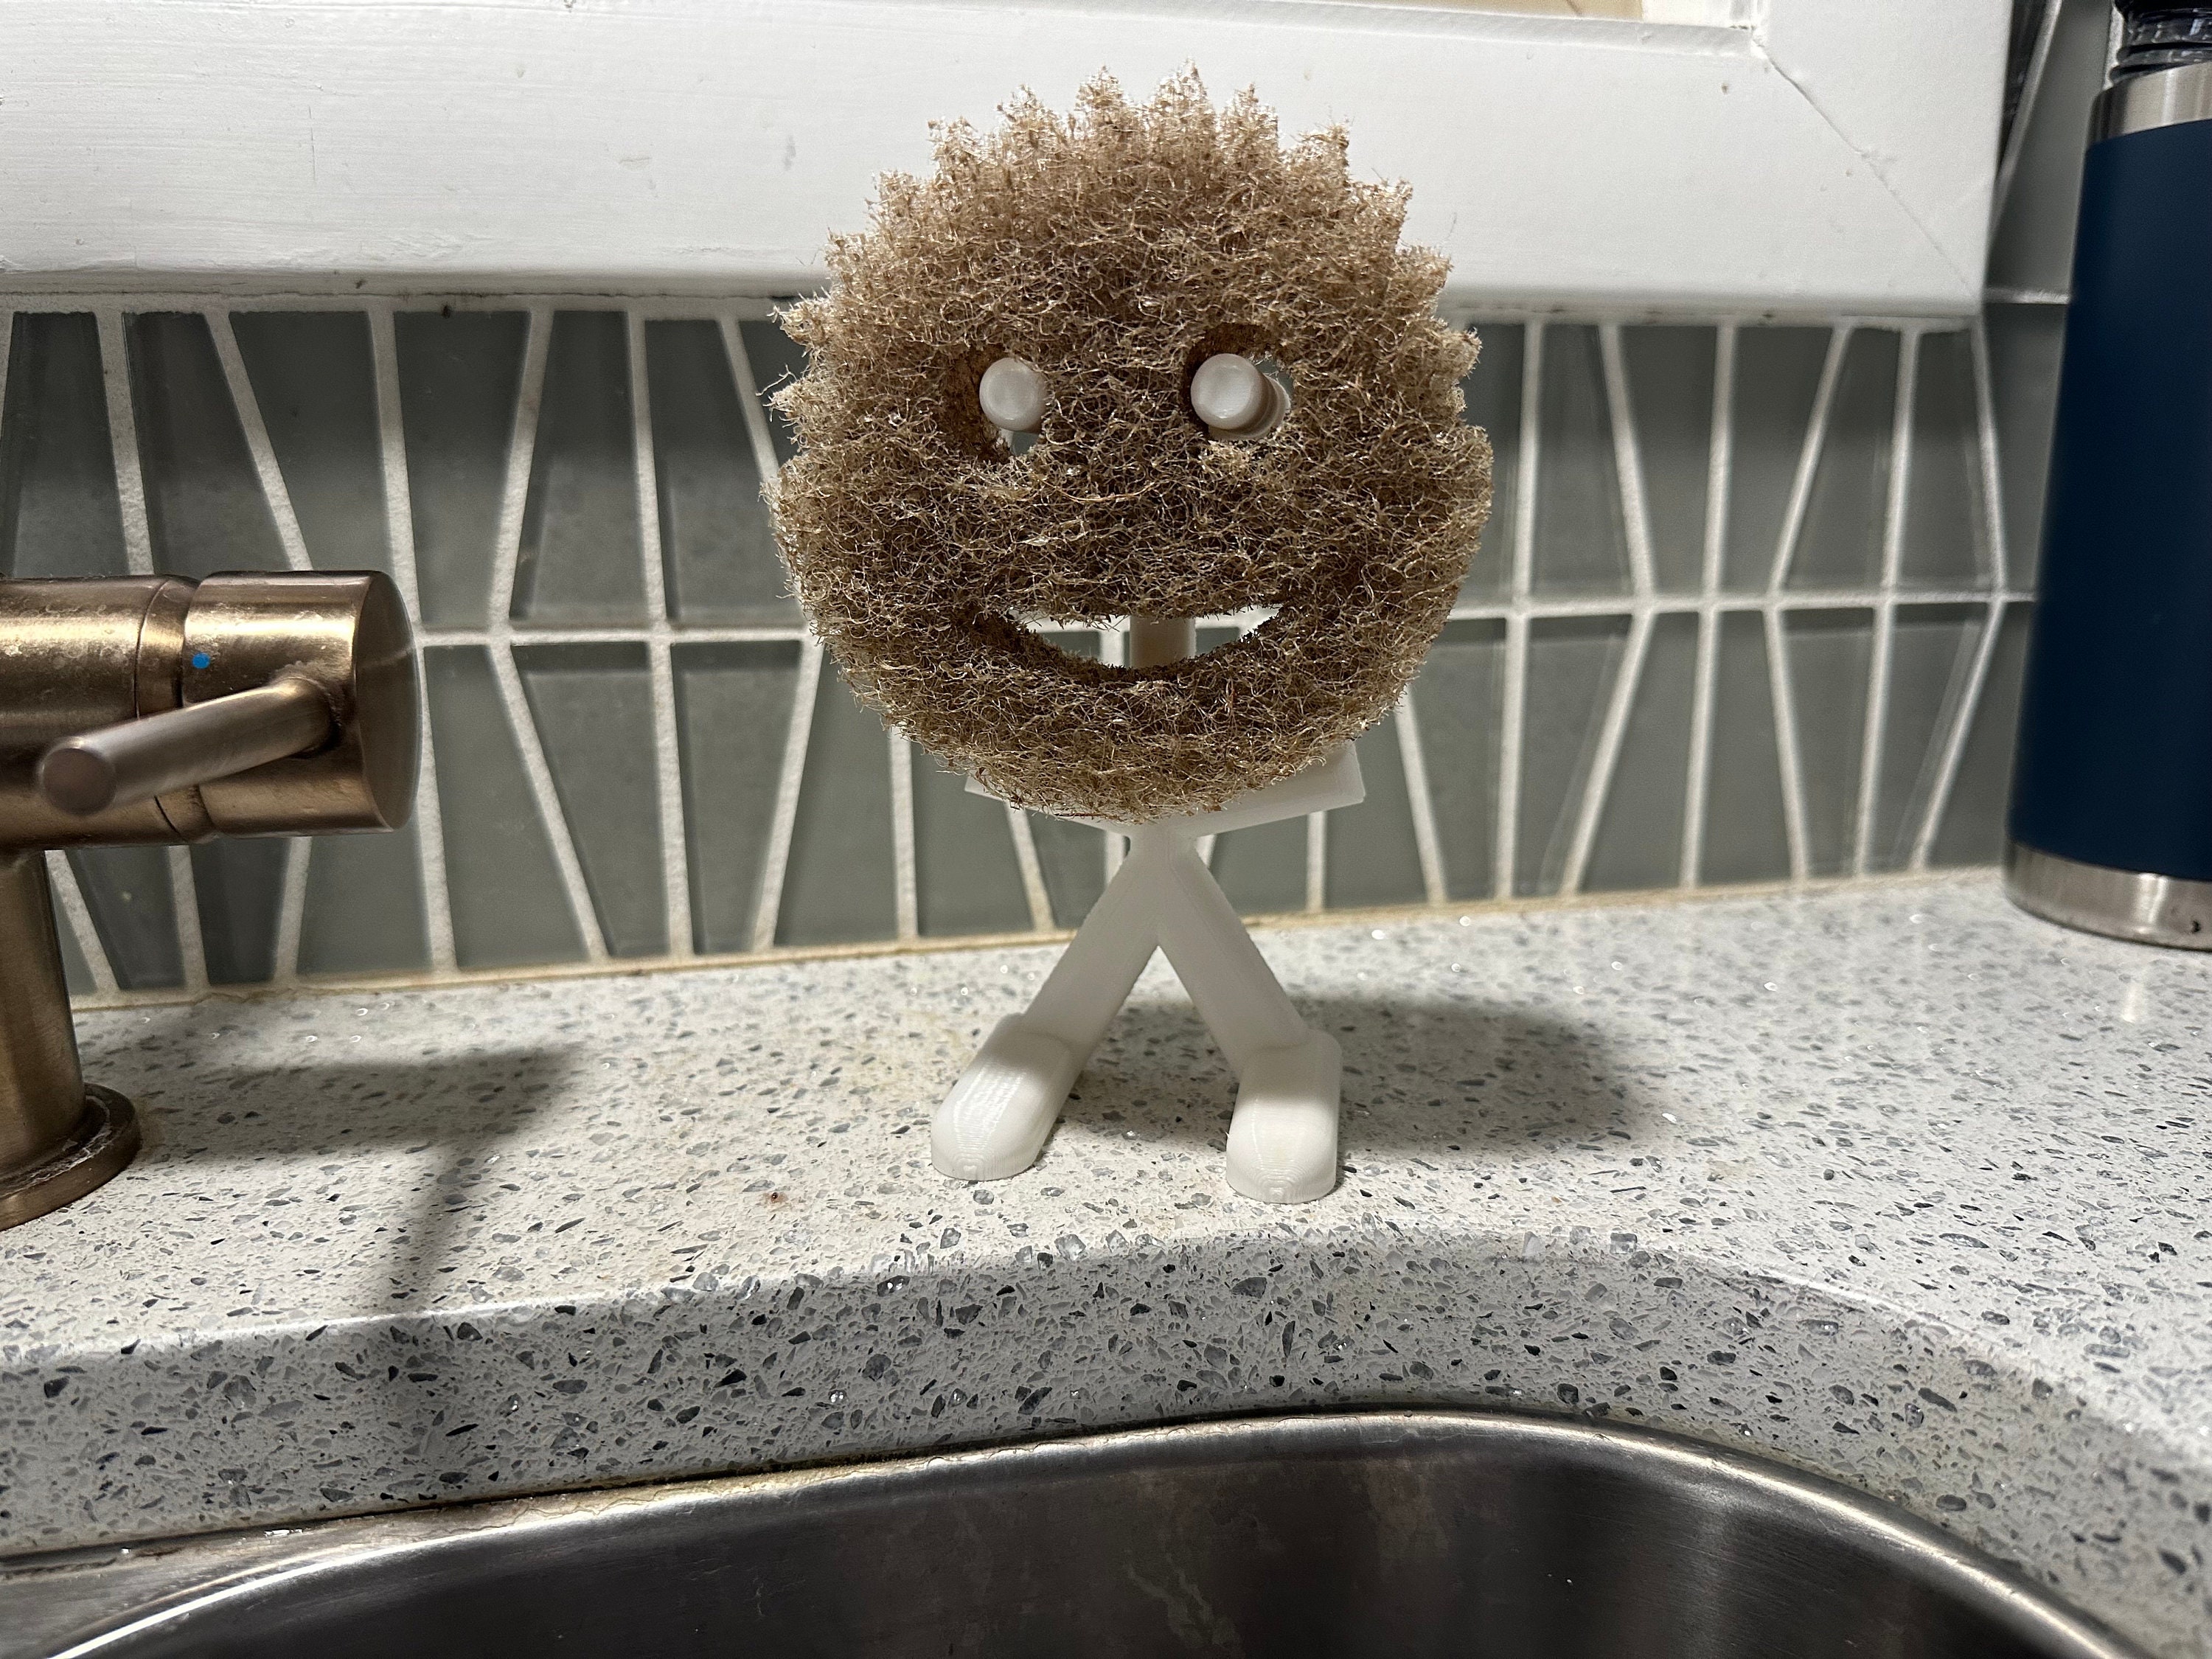 Scrub Daddy Sponge Holder - Sponge Caddy - Suction Sponge Holder, Sink  Organizer for Kitchen and Bathroom, Self Draining, Easy to Clean Dishwasher